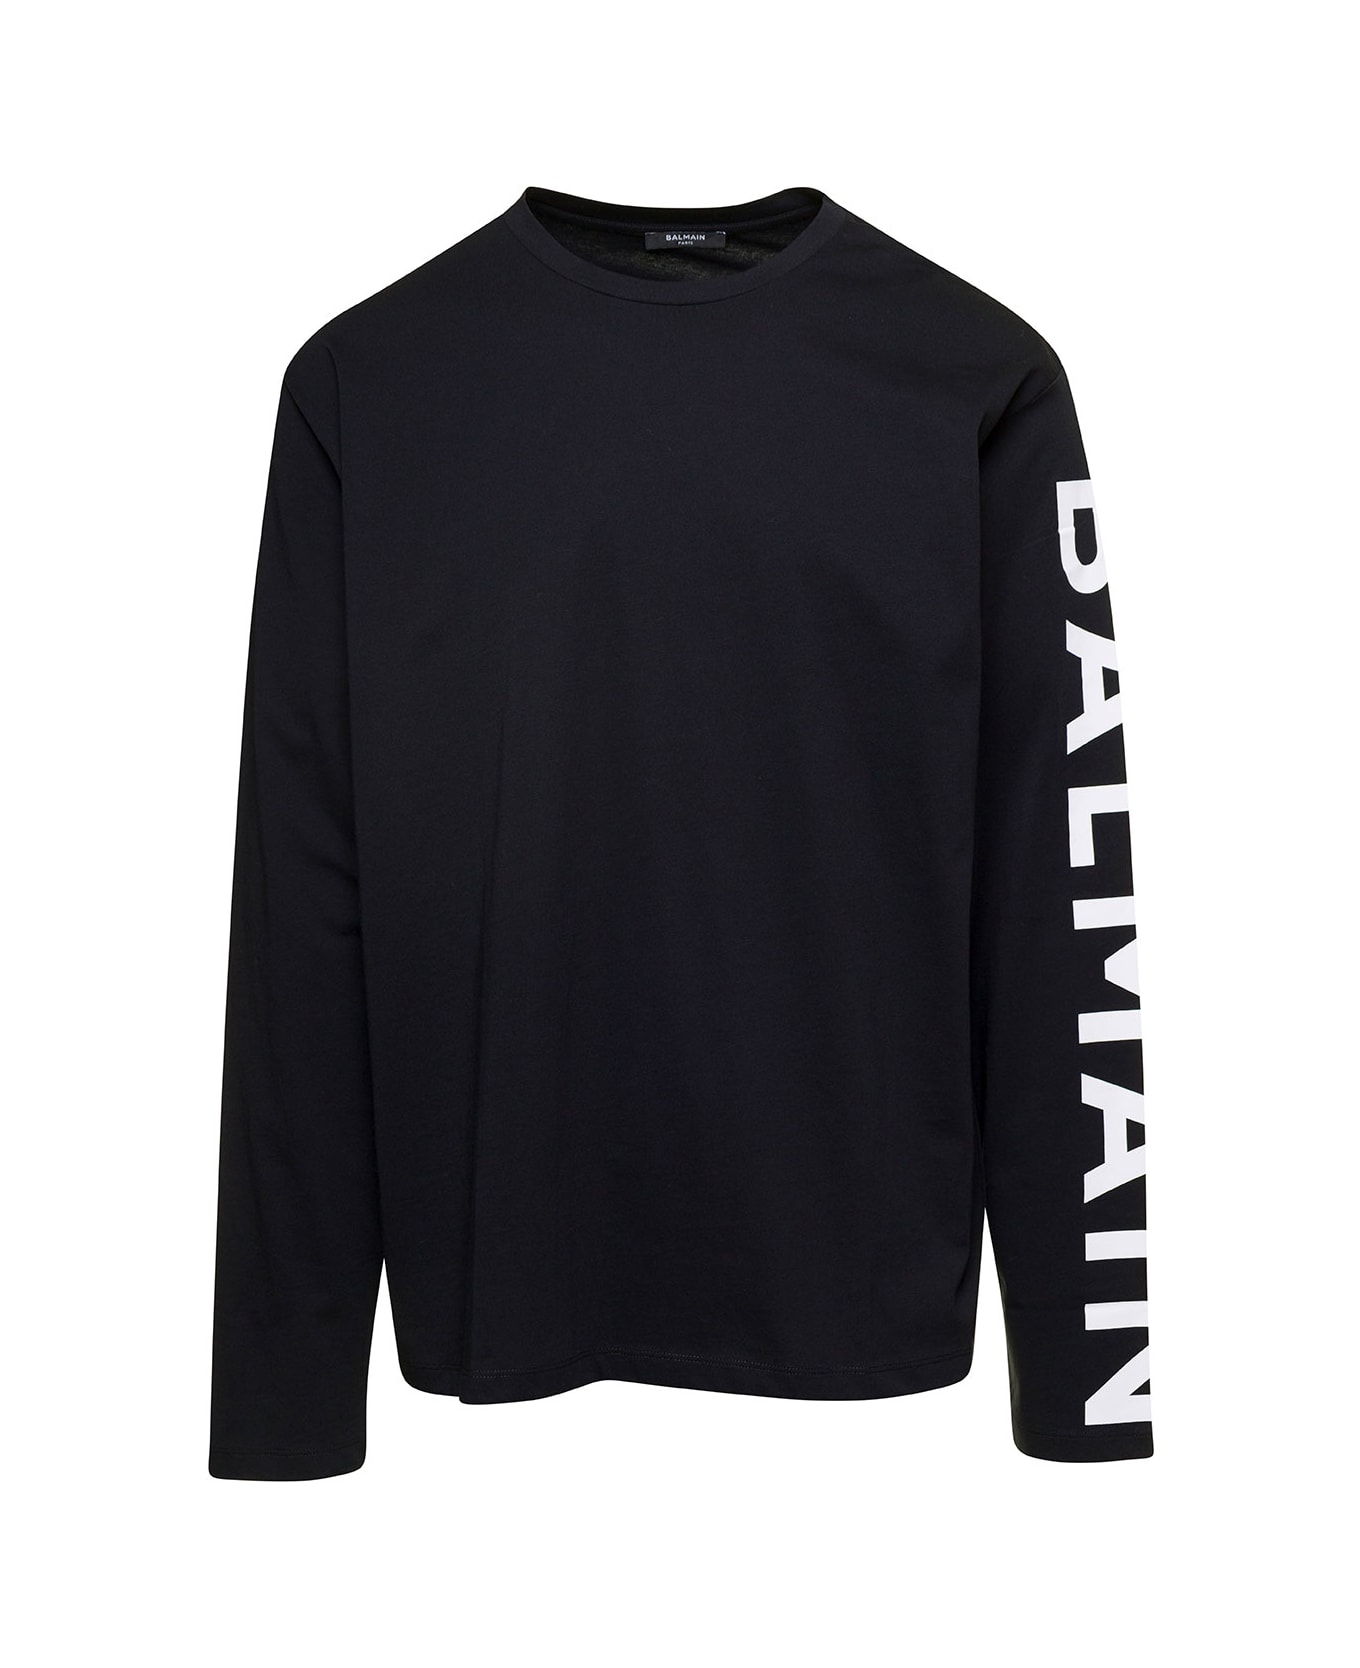 Balmain Monogramm Black Crewneck Sweatshirt With Logo Print On The Sleeve In Cotton Man - Black